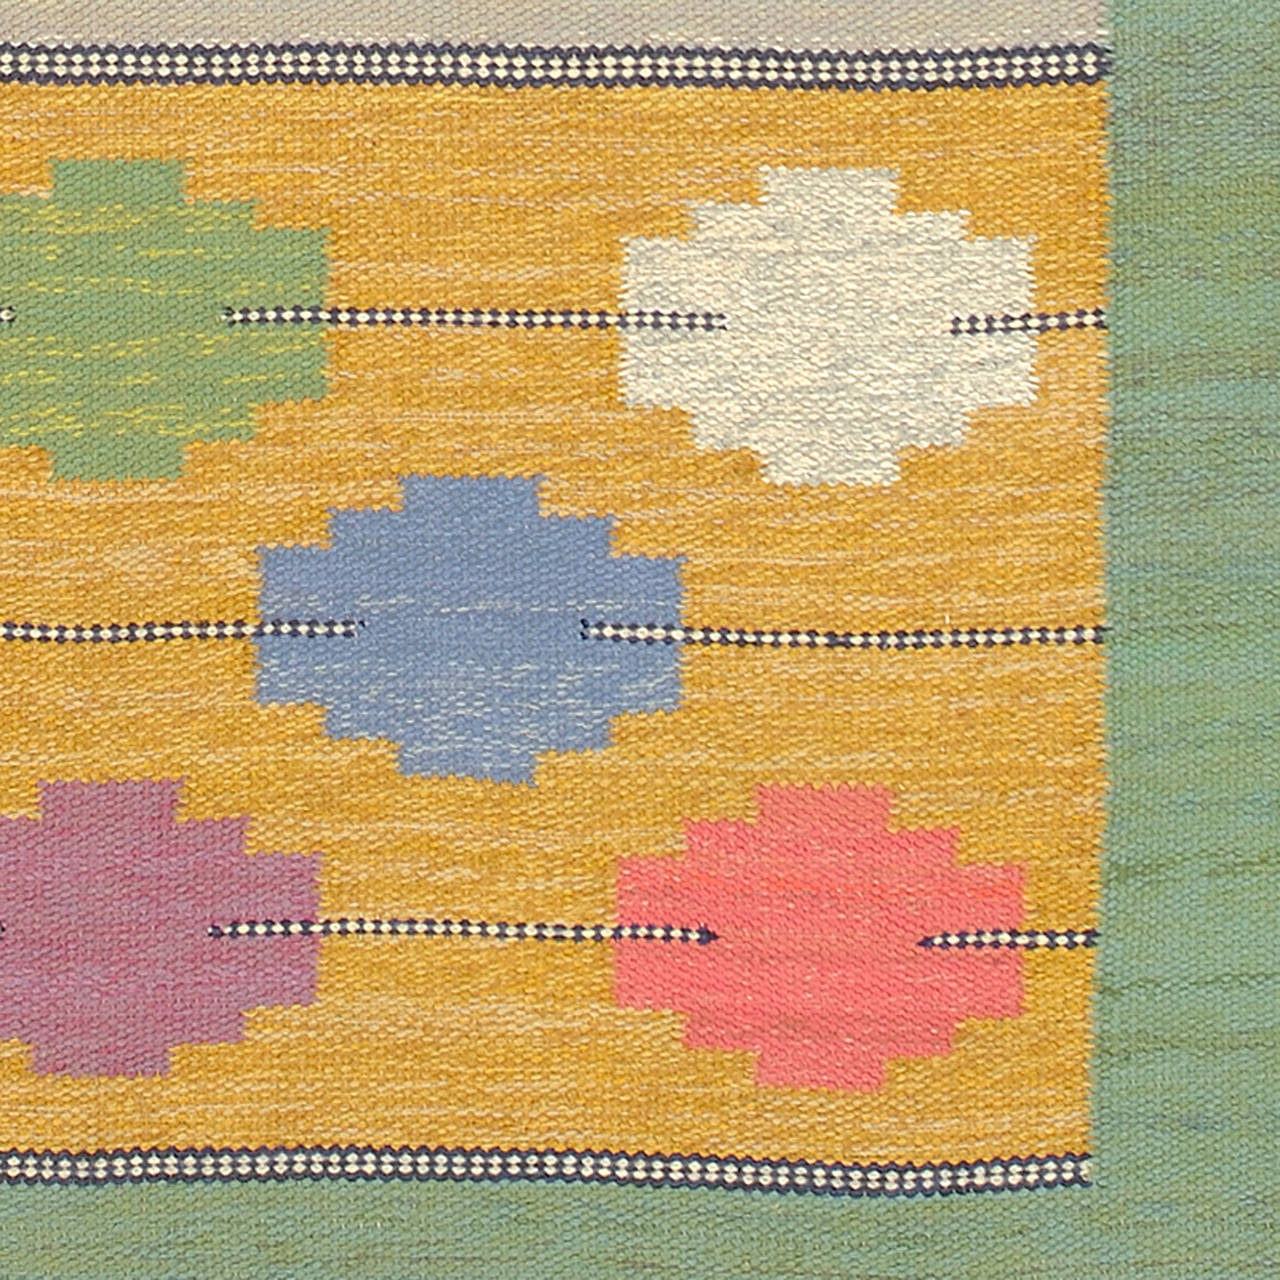 Mid-20th Century Swedish Flat Weave Carpet
Sweden, circa 1950s
Swedish Flat-weave Technique
Initialed: 'SCE'